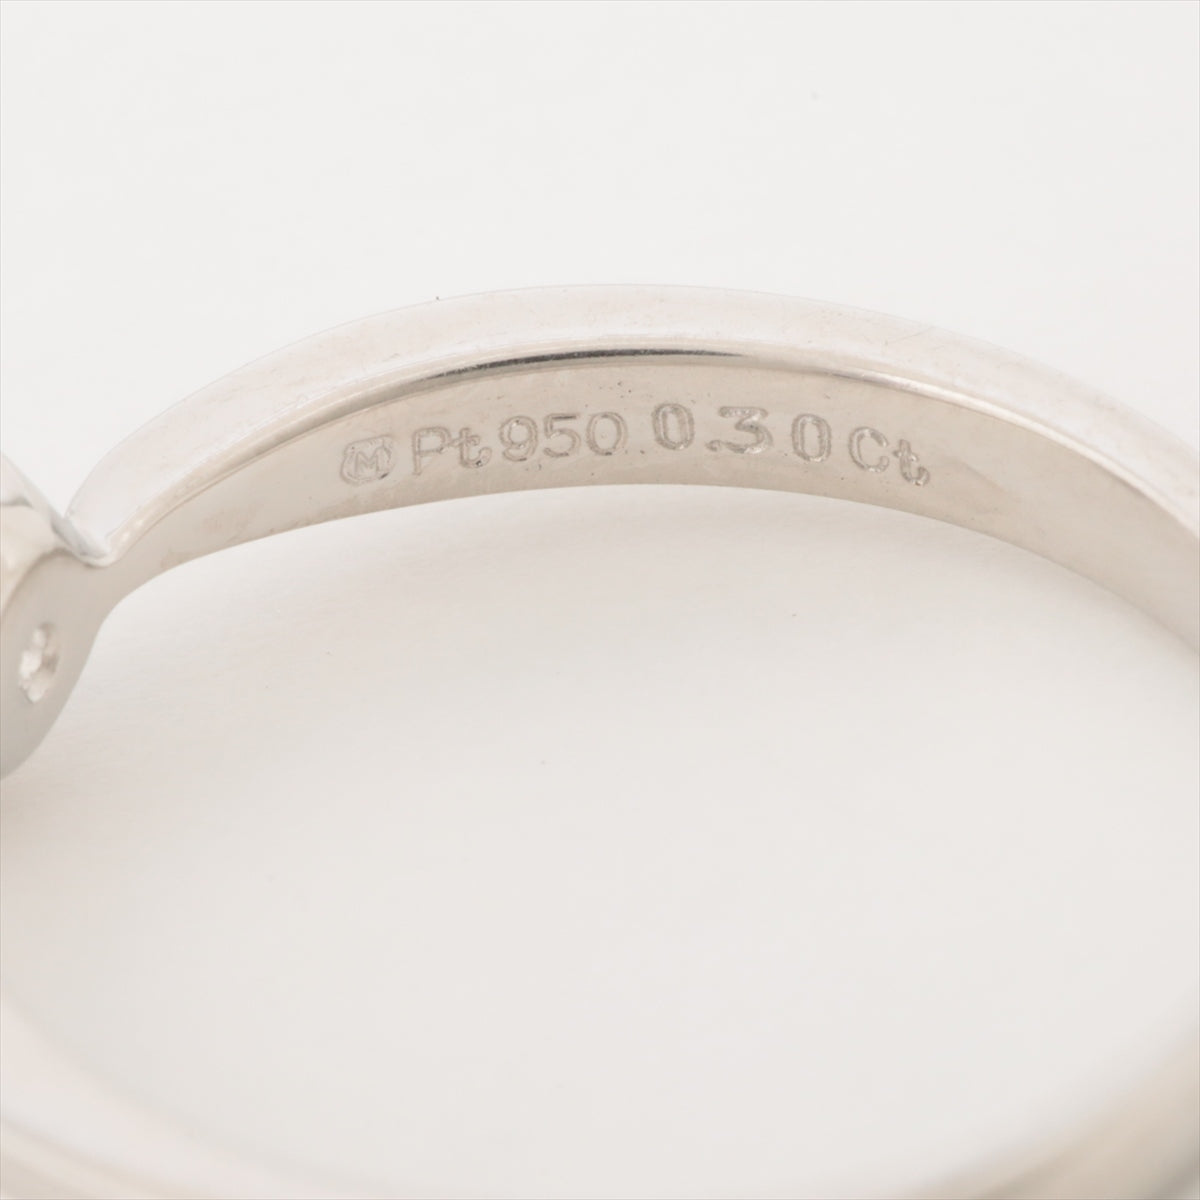 Mikimoto Diamond Ring Pt950 3.8g 0.30